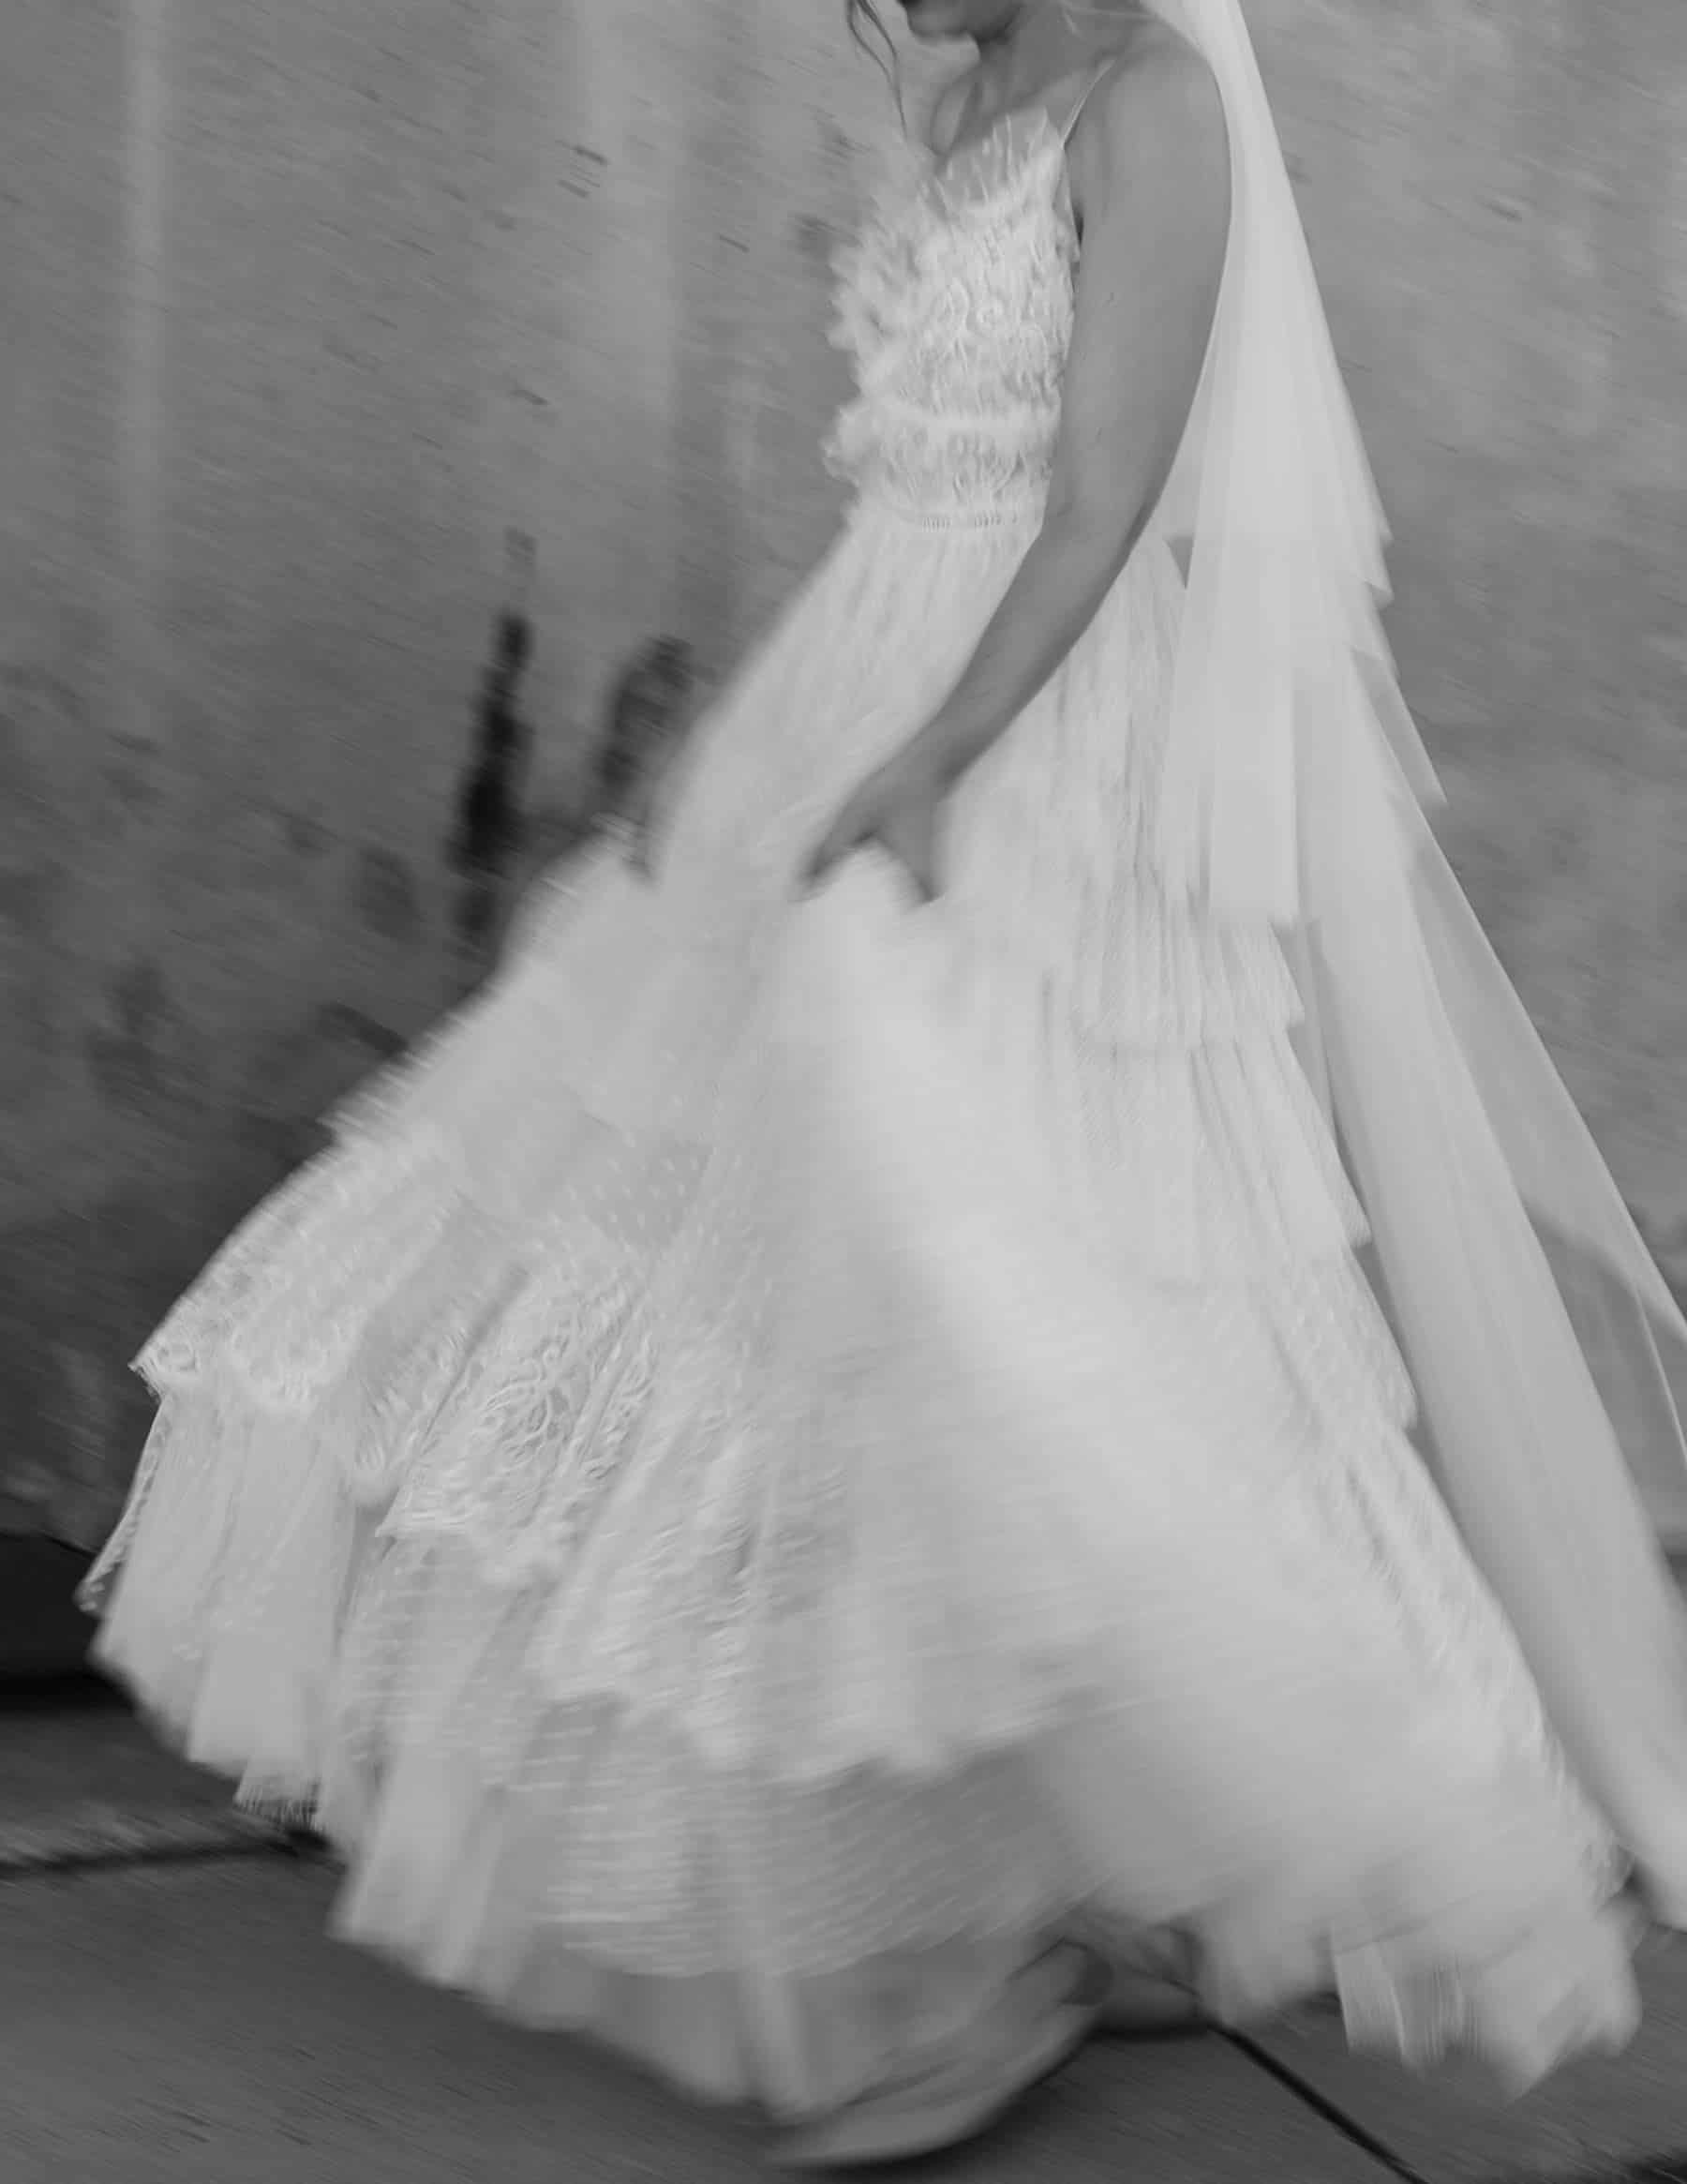 Best wedding dresses of 2019 - boho tiered lace dress by Nevenka